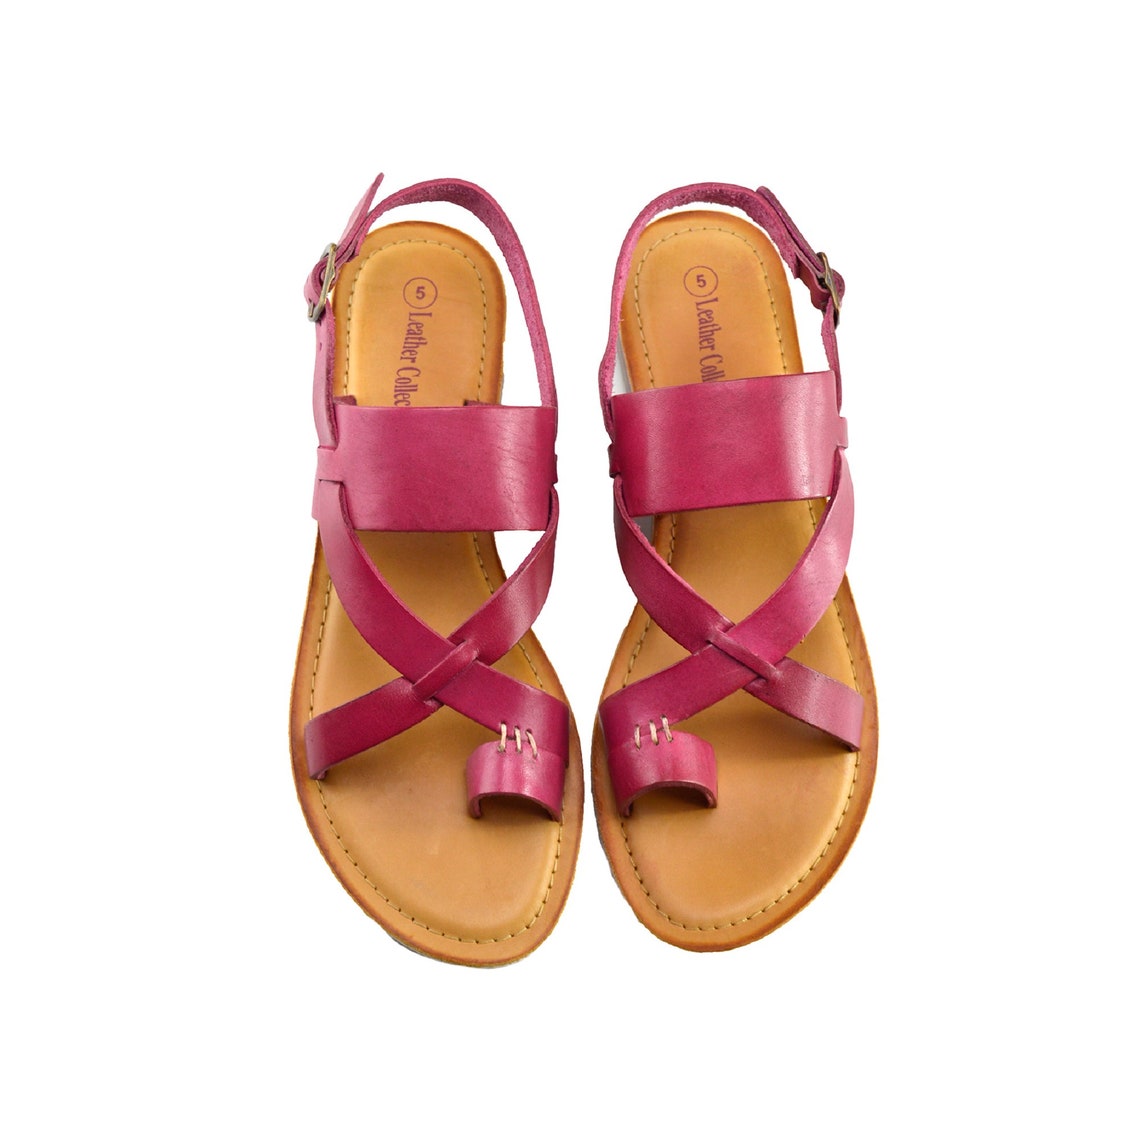 Women's summer sandals pink | Etsy